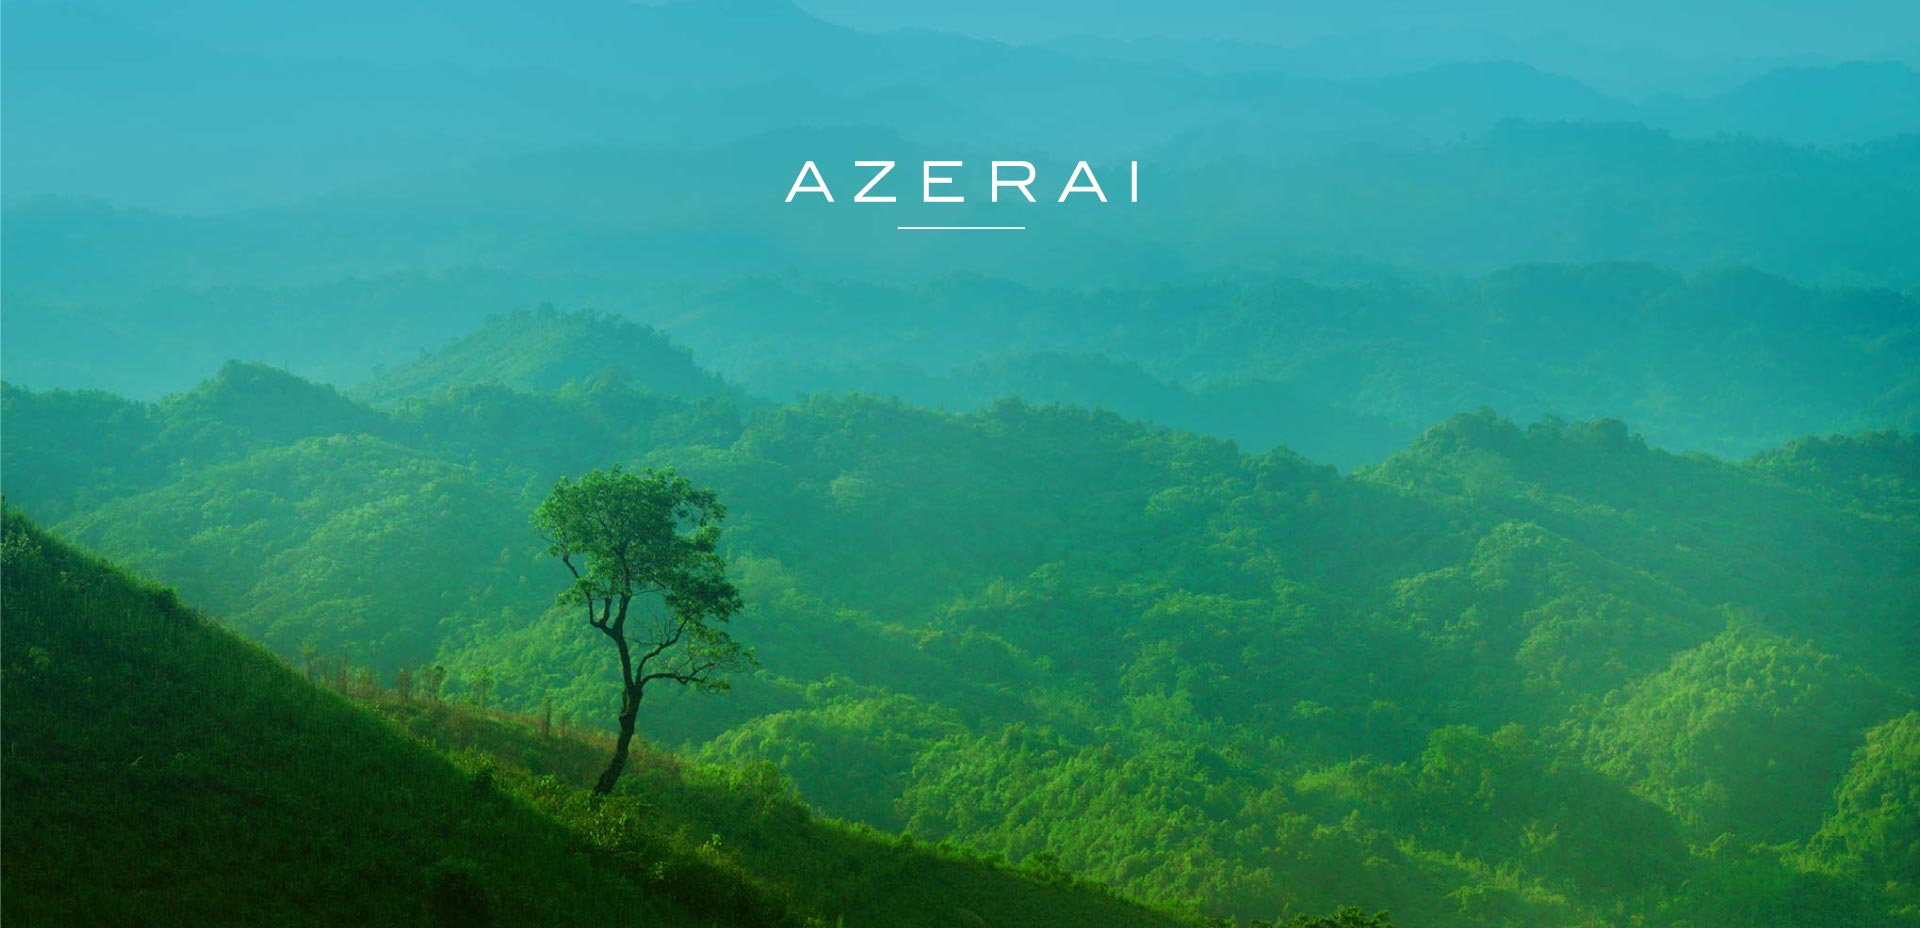 Azerai debuts its new brand in Luang Prabang